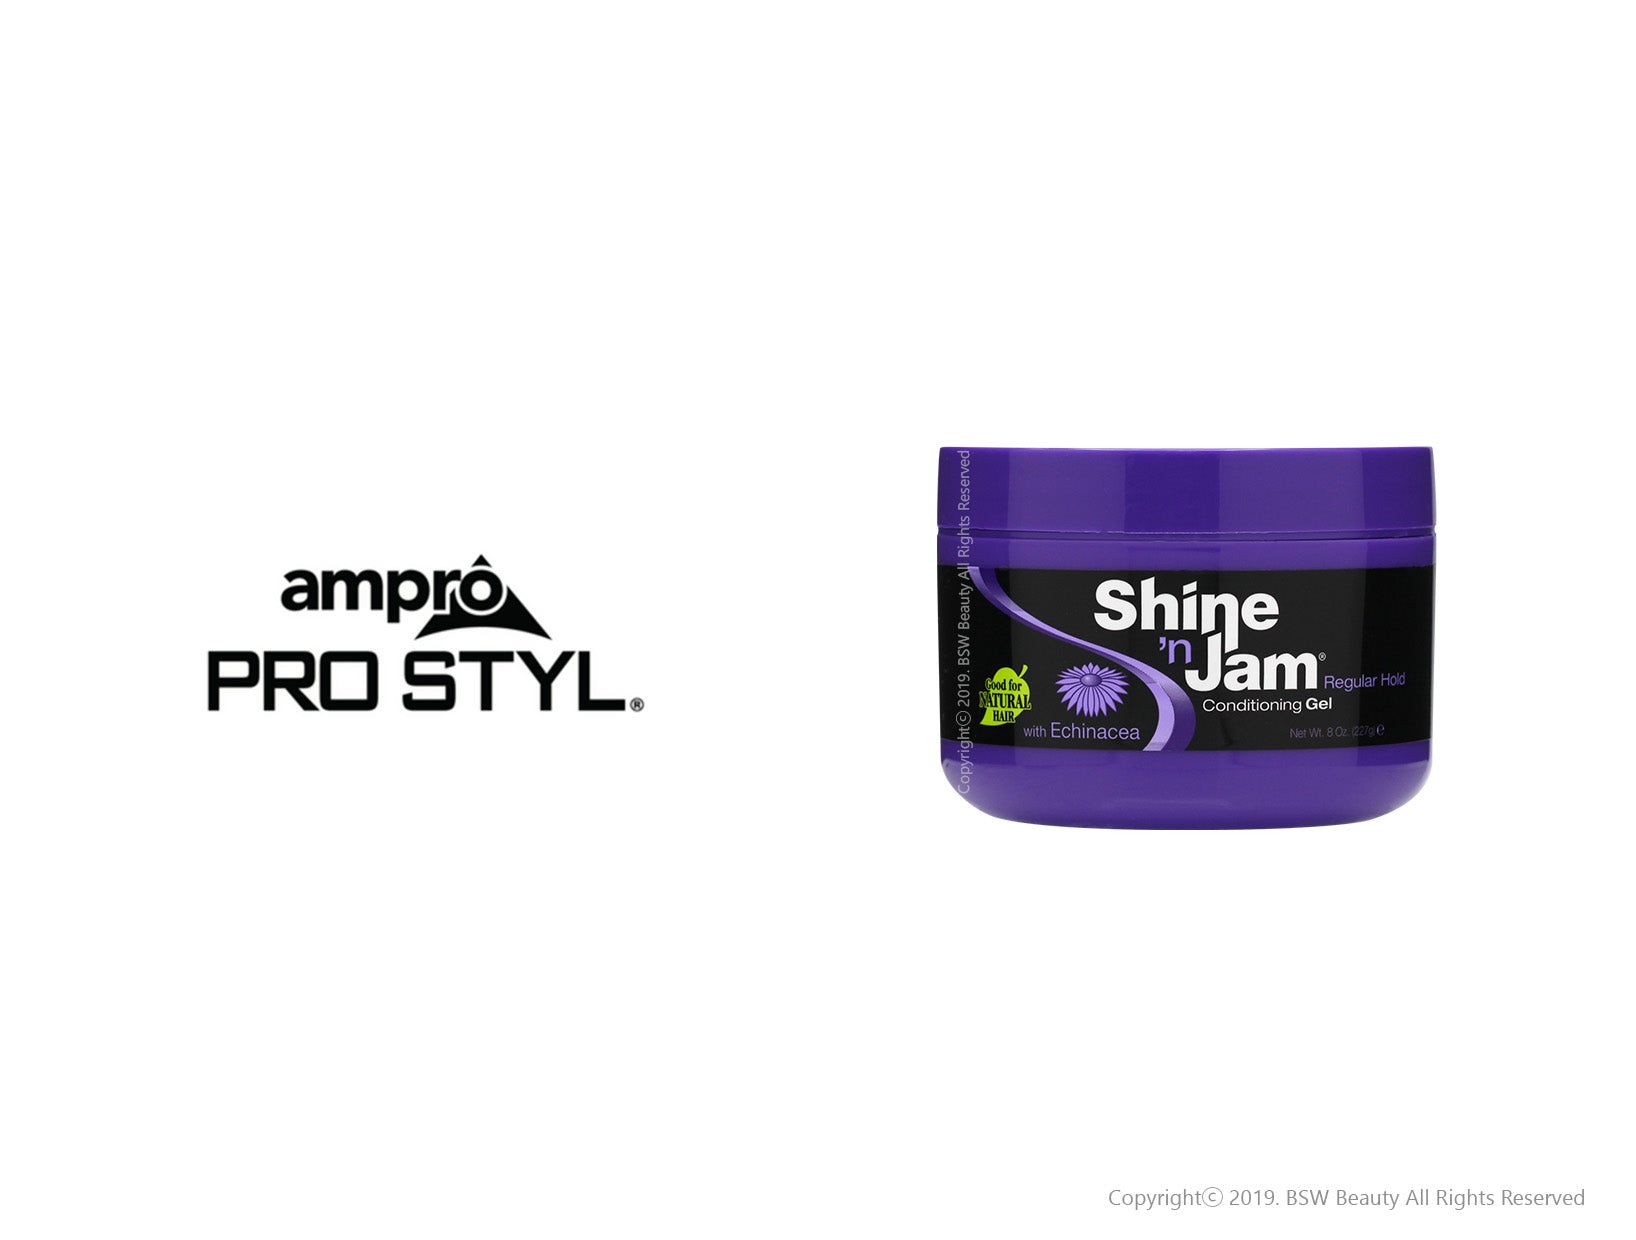 AMPRO PRO STYLE SHINE'N JAM CONDITIONING GEL REGULAR HOLD - 2 SIZE